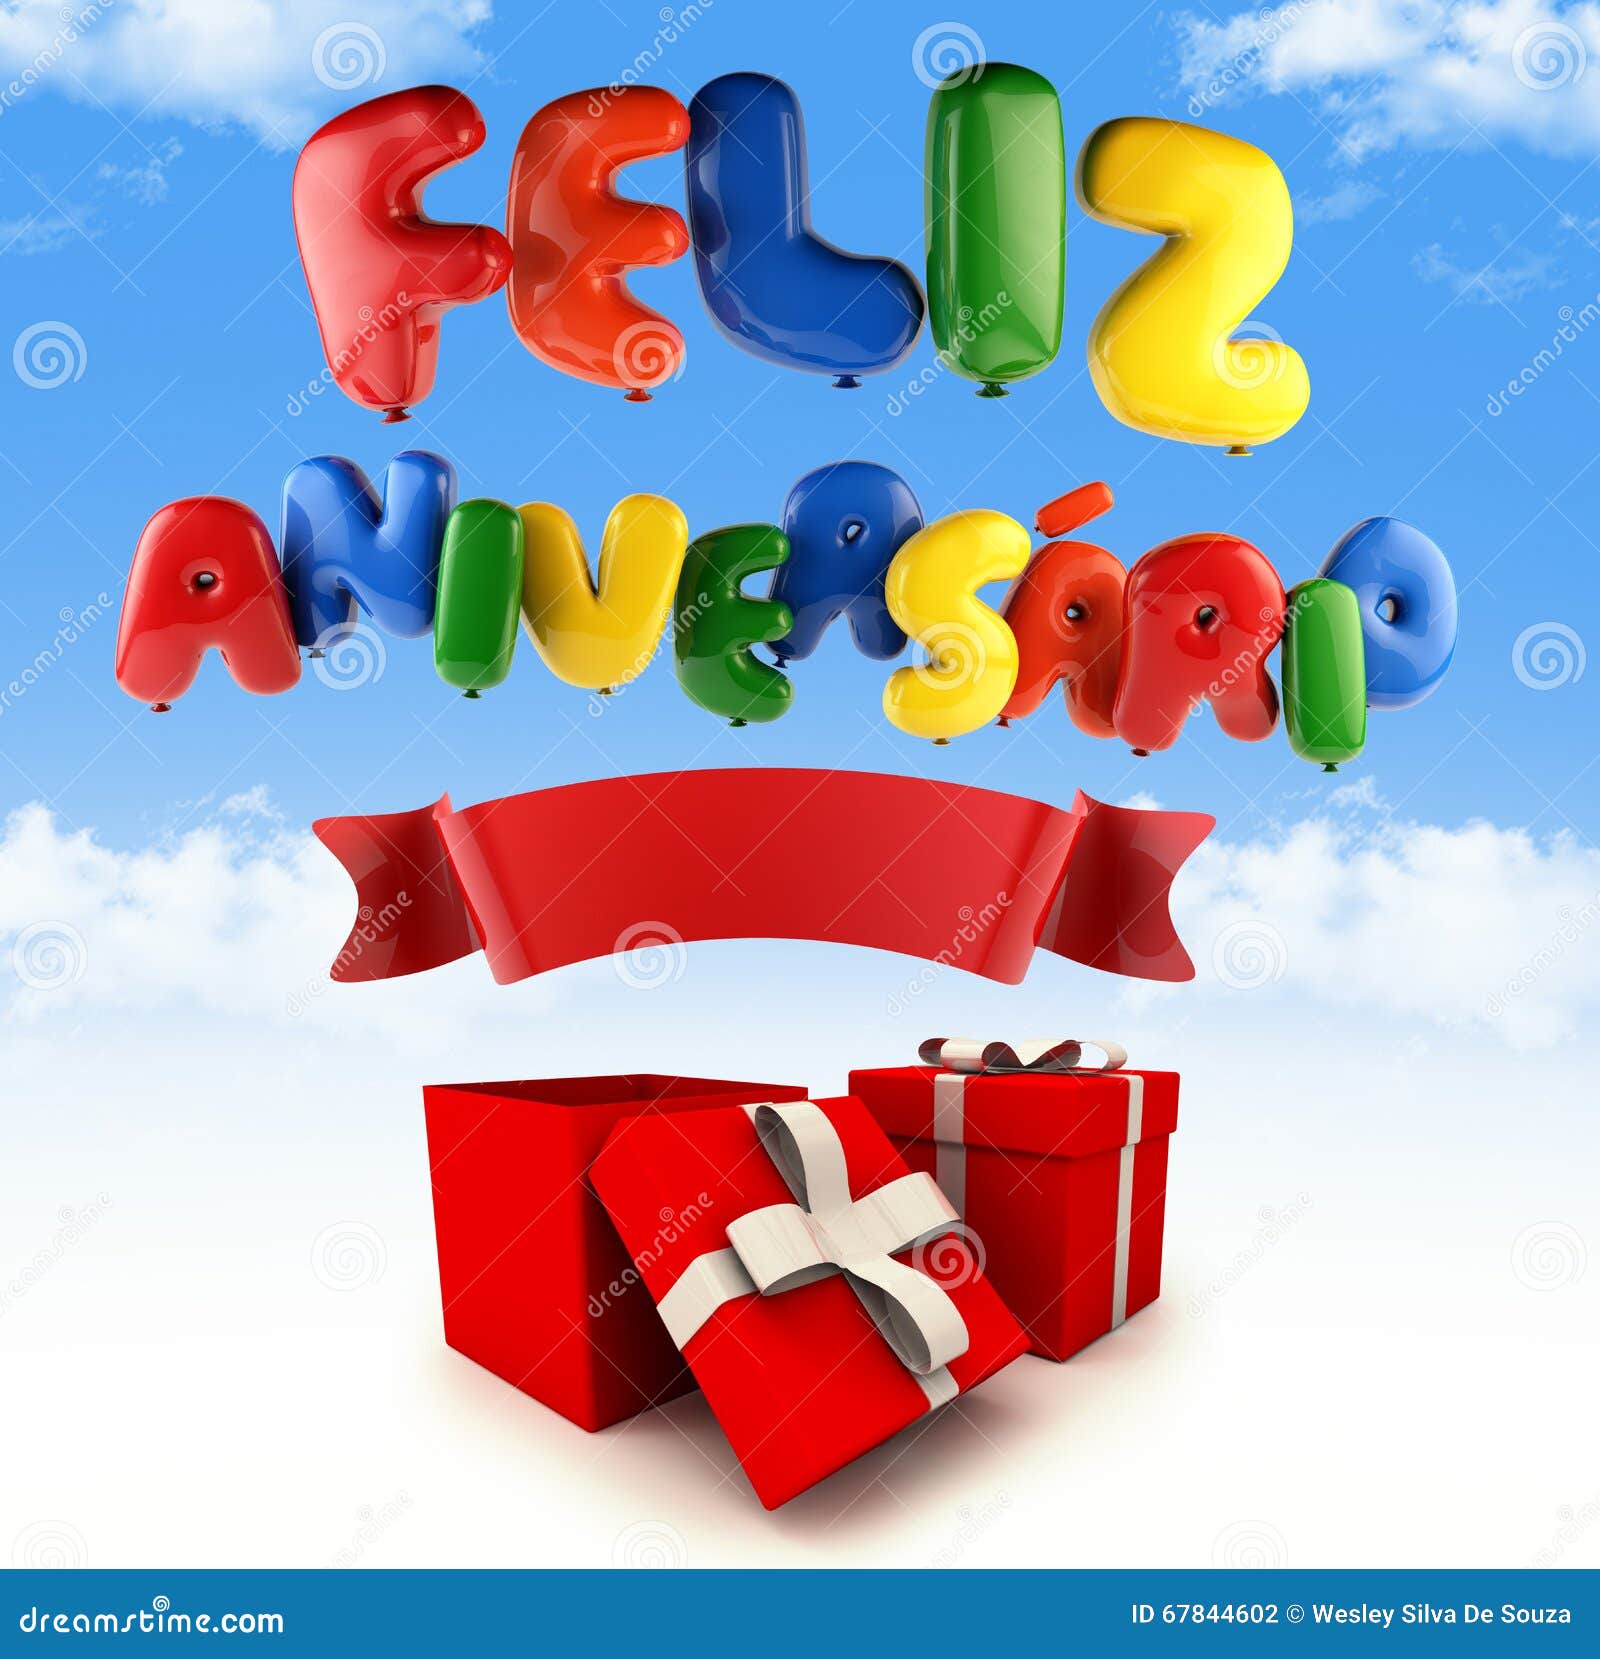 feliz aniversario portuguese happy birthday - font ballon